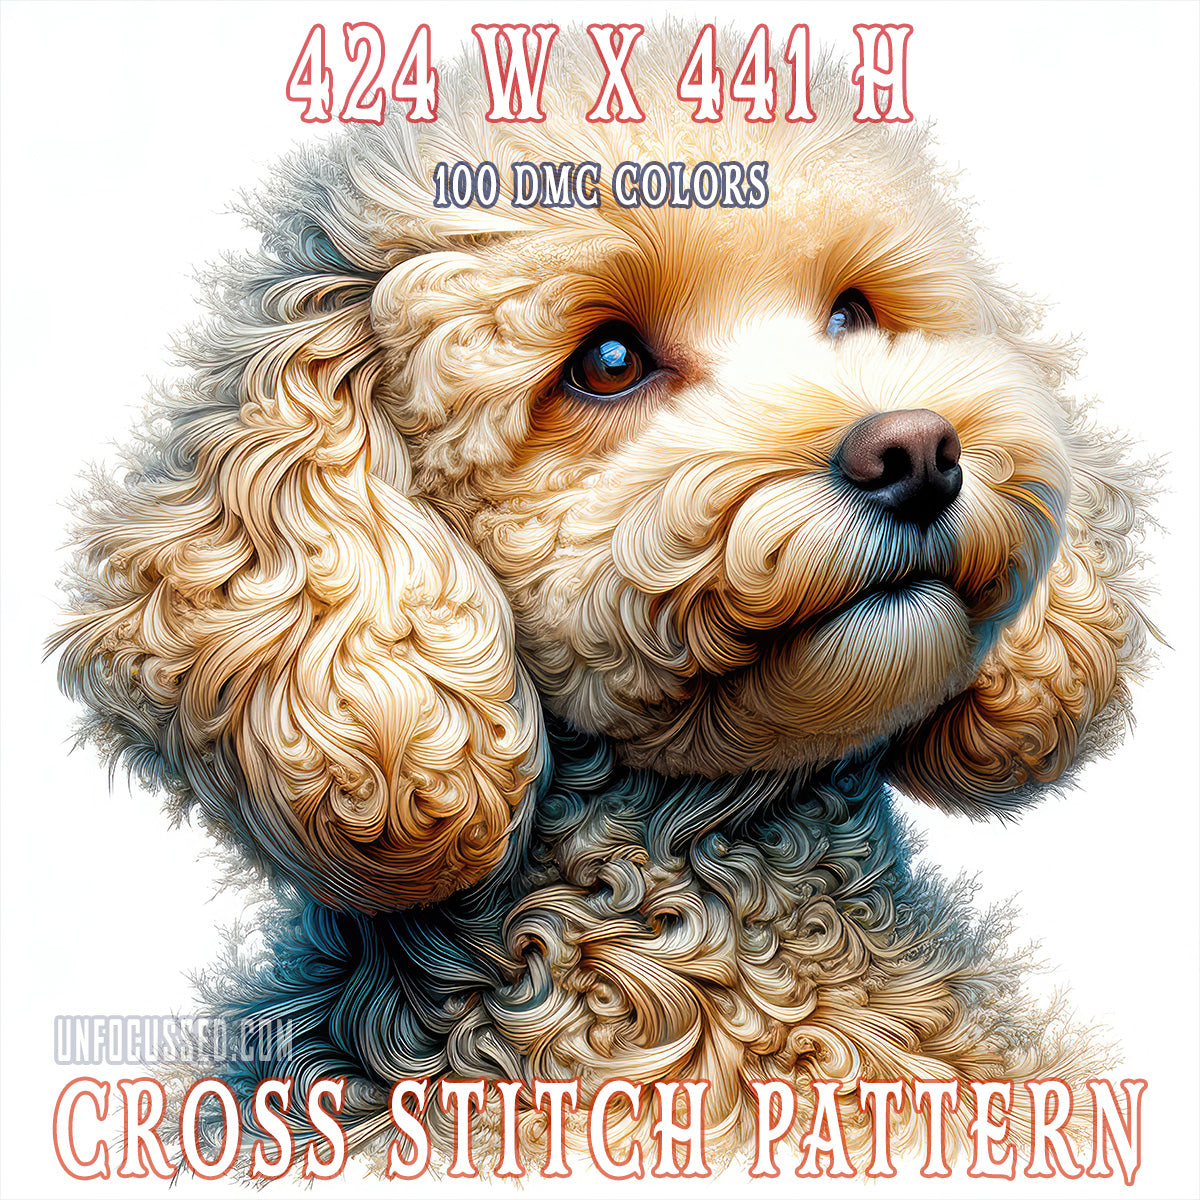 The Soulful Poodle Cross Stitch Pattern